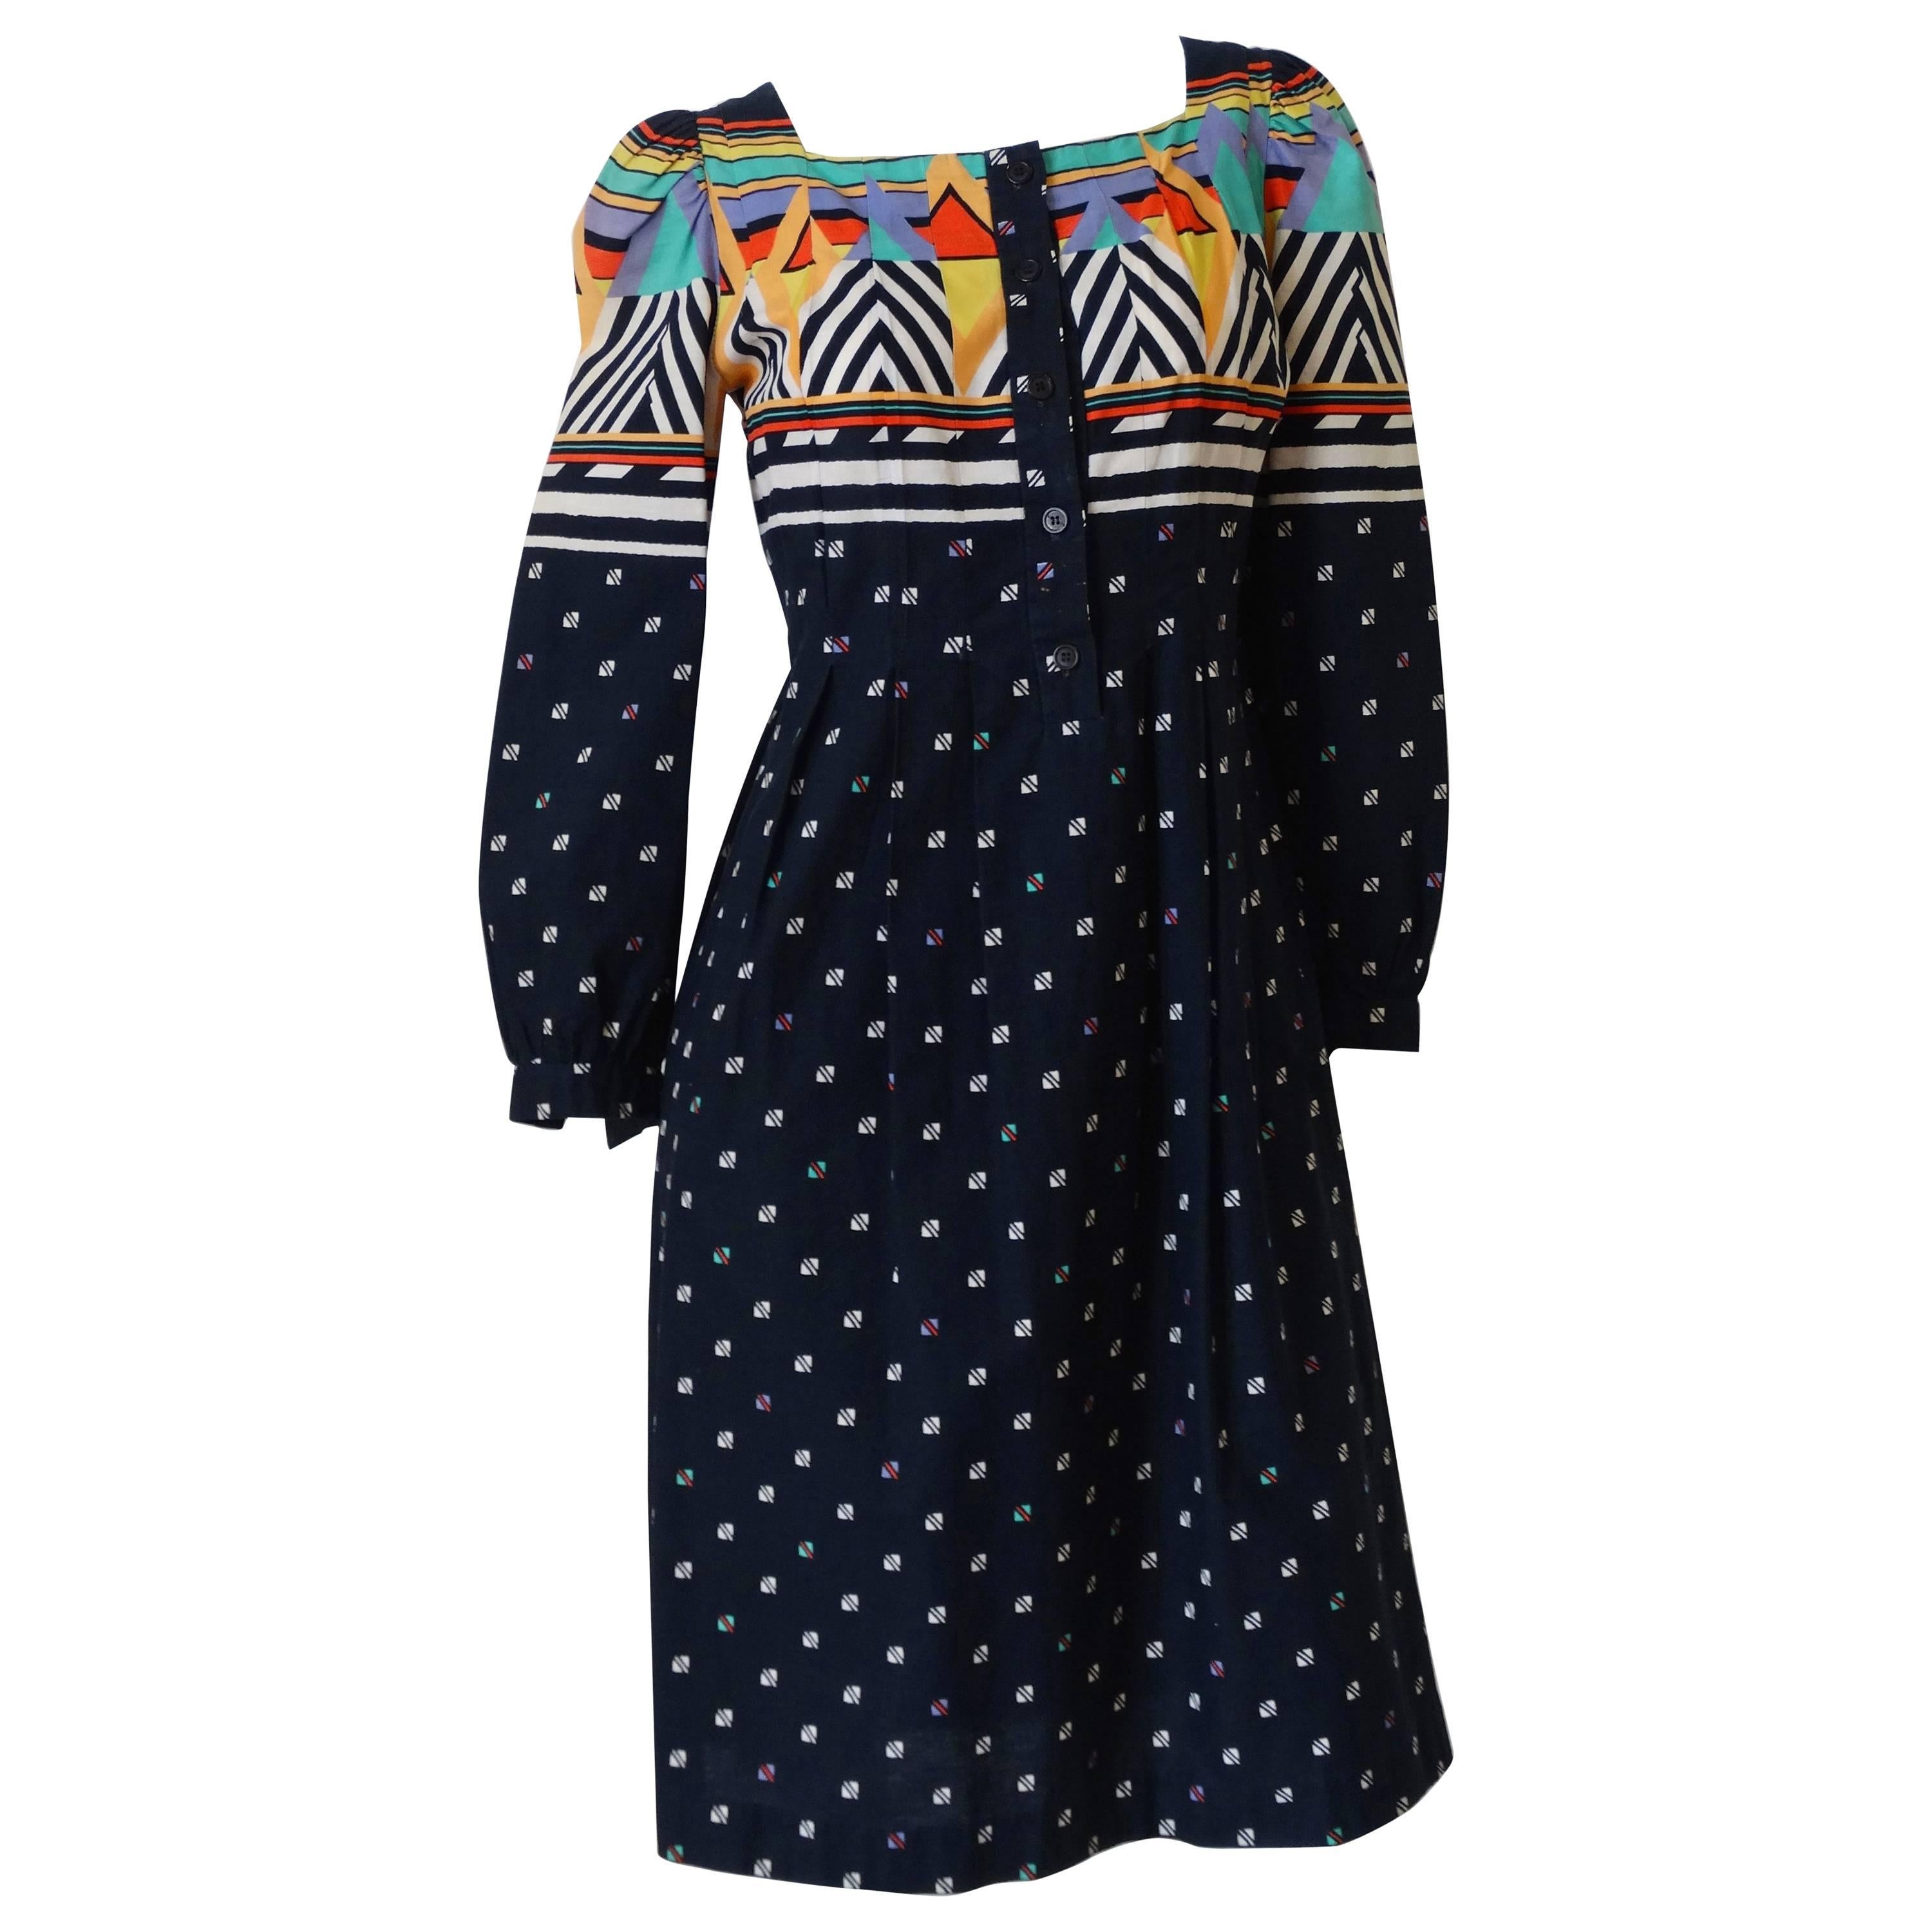 1980s "California Girl" Geometric Print Dress For Sale